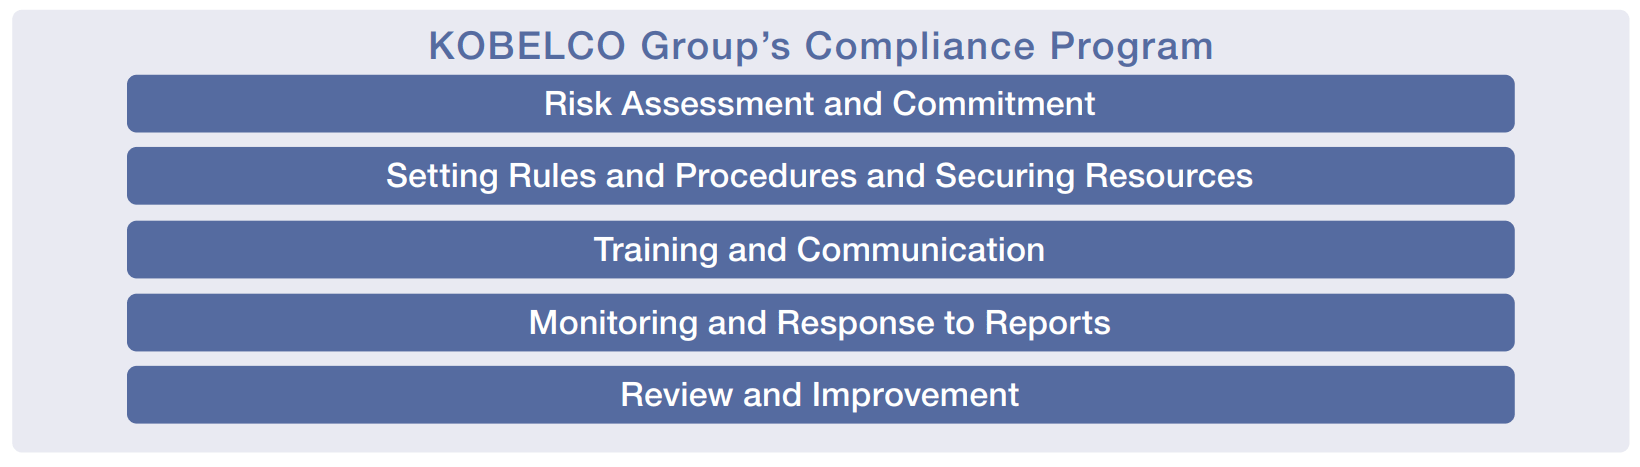 The KOBELCO Group & Compliance Program